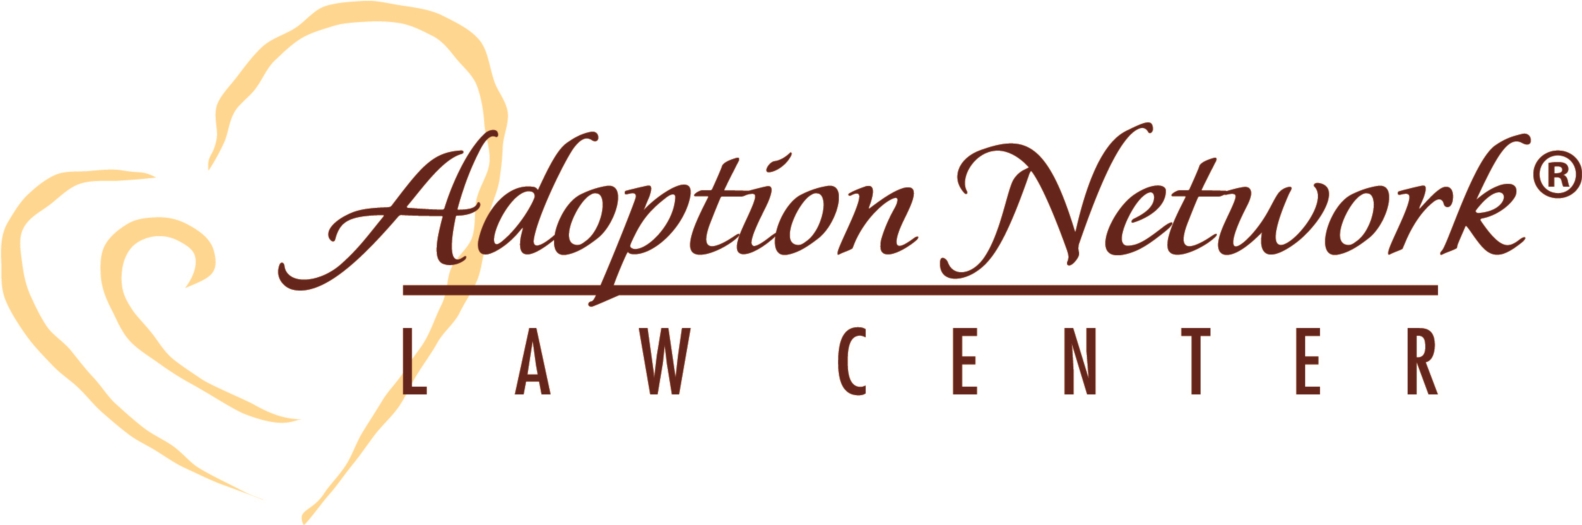 Adoption Network Law Center logo